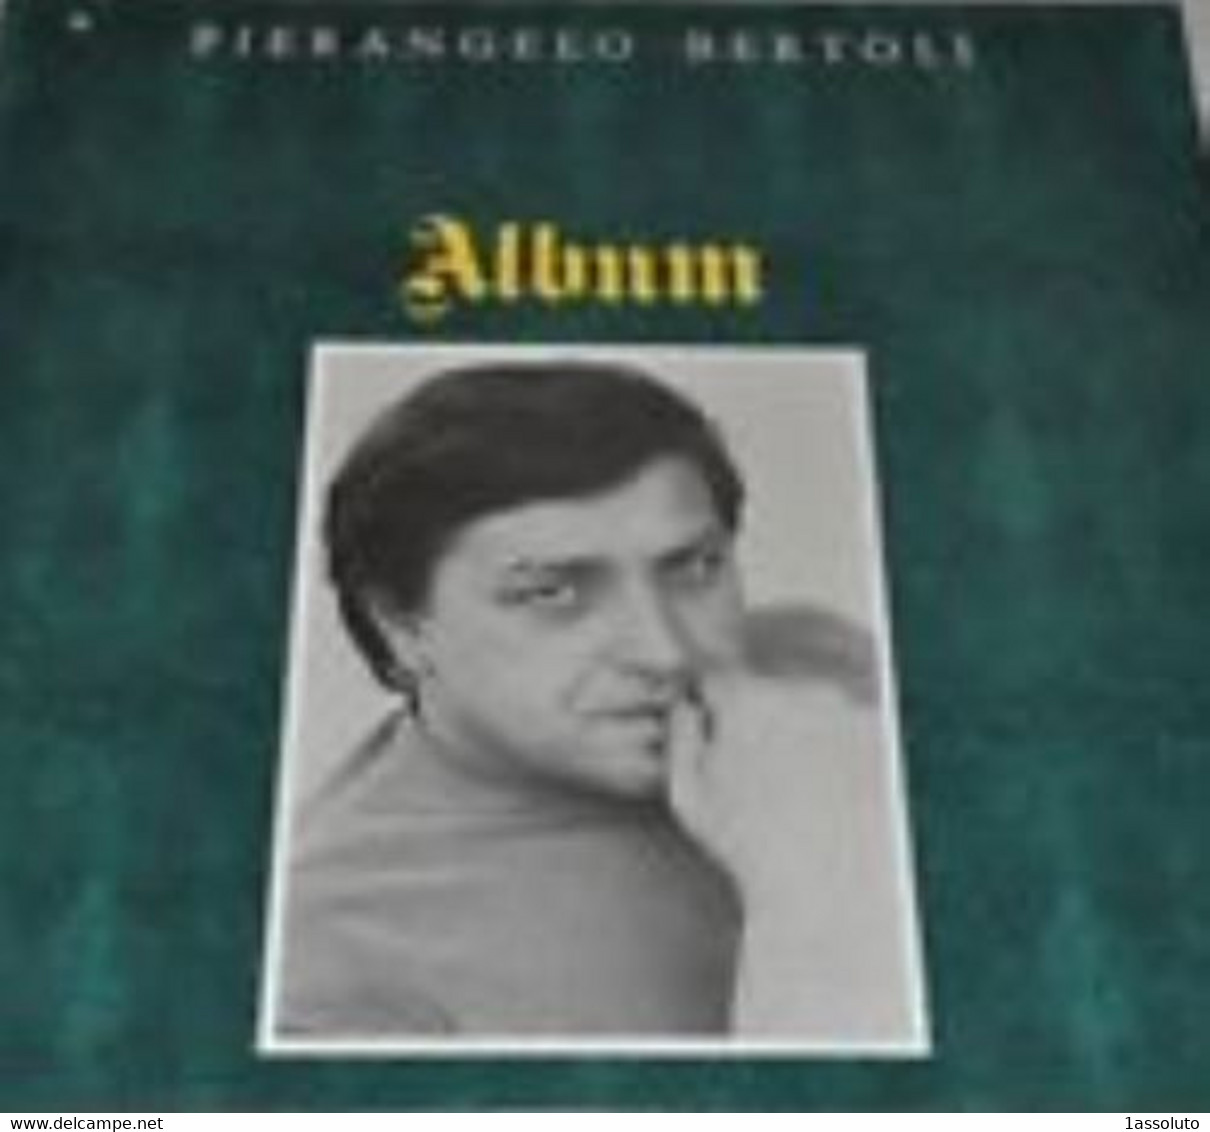 PIERANGELO BERTOLI - Album - - Other - Italian Music